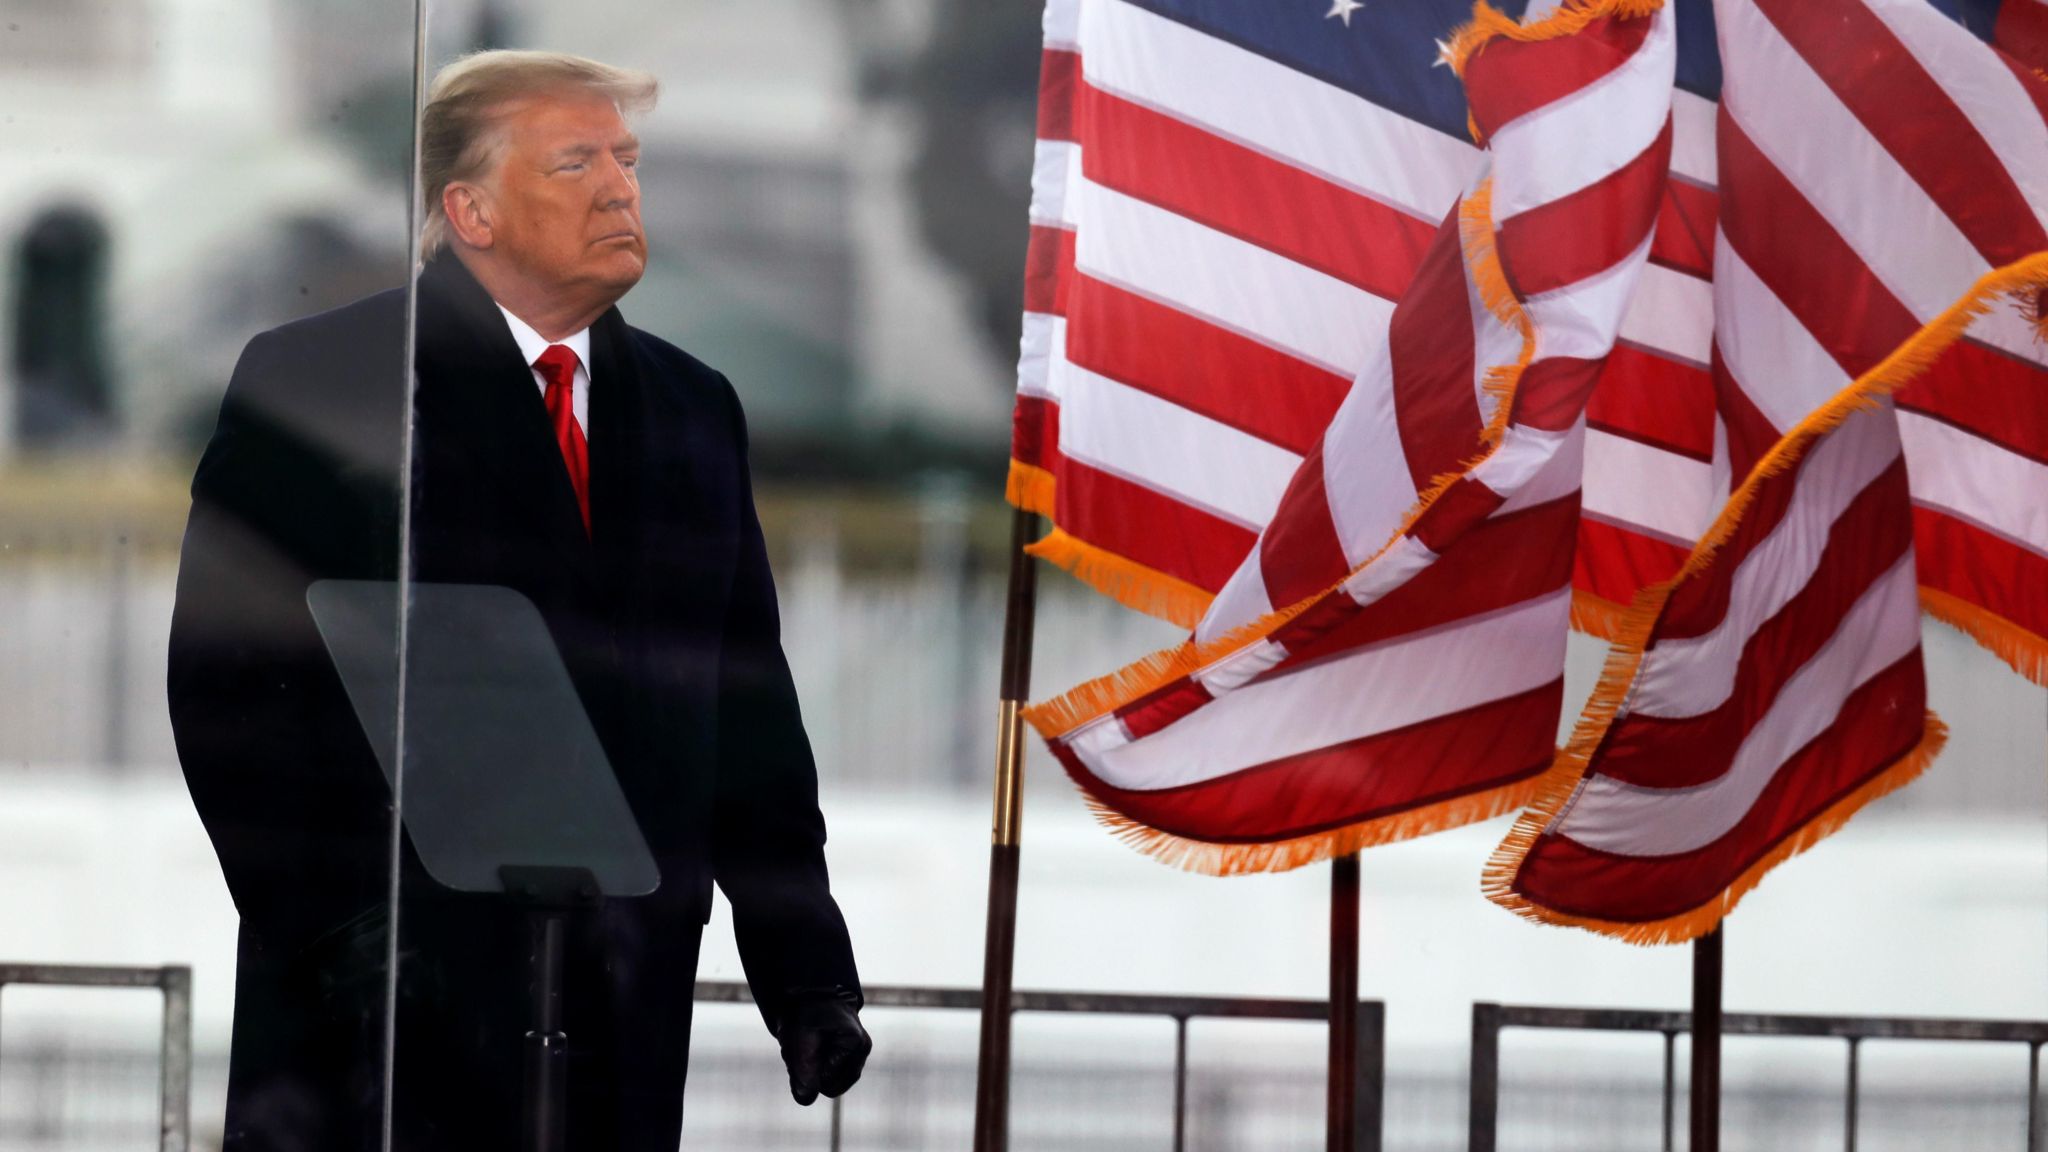 Trump in dark overcoat next to flag behind plexiglass